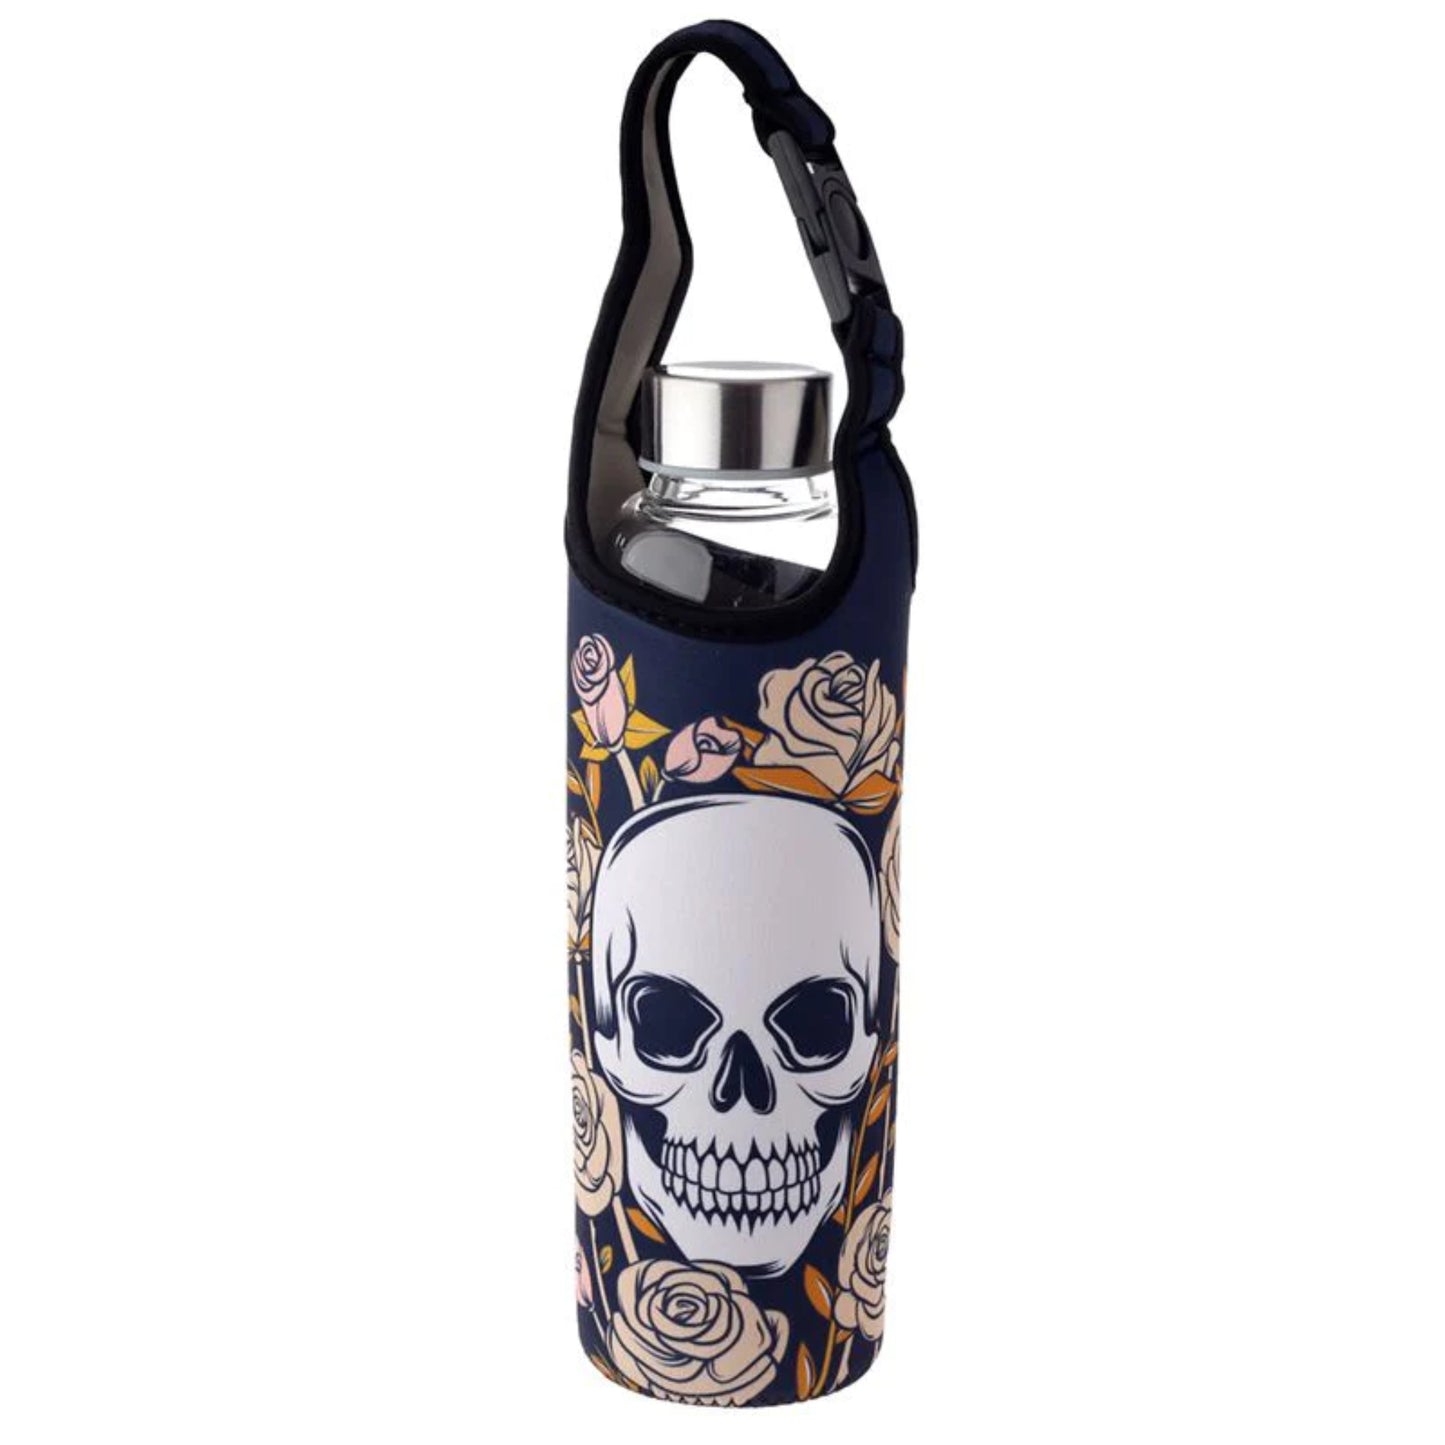 Skulls & Roses Reusable Glass Water Bottle with Protective Neoprene Sleeve